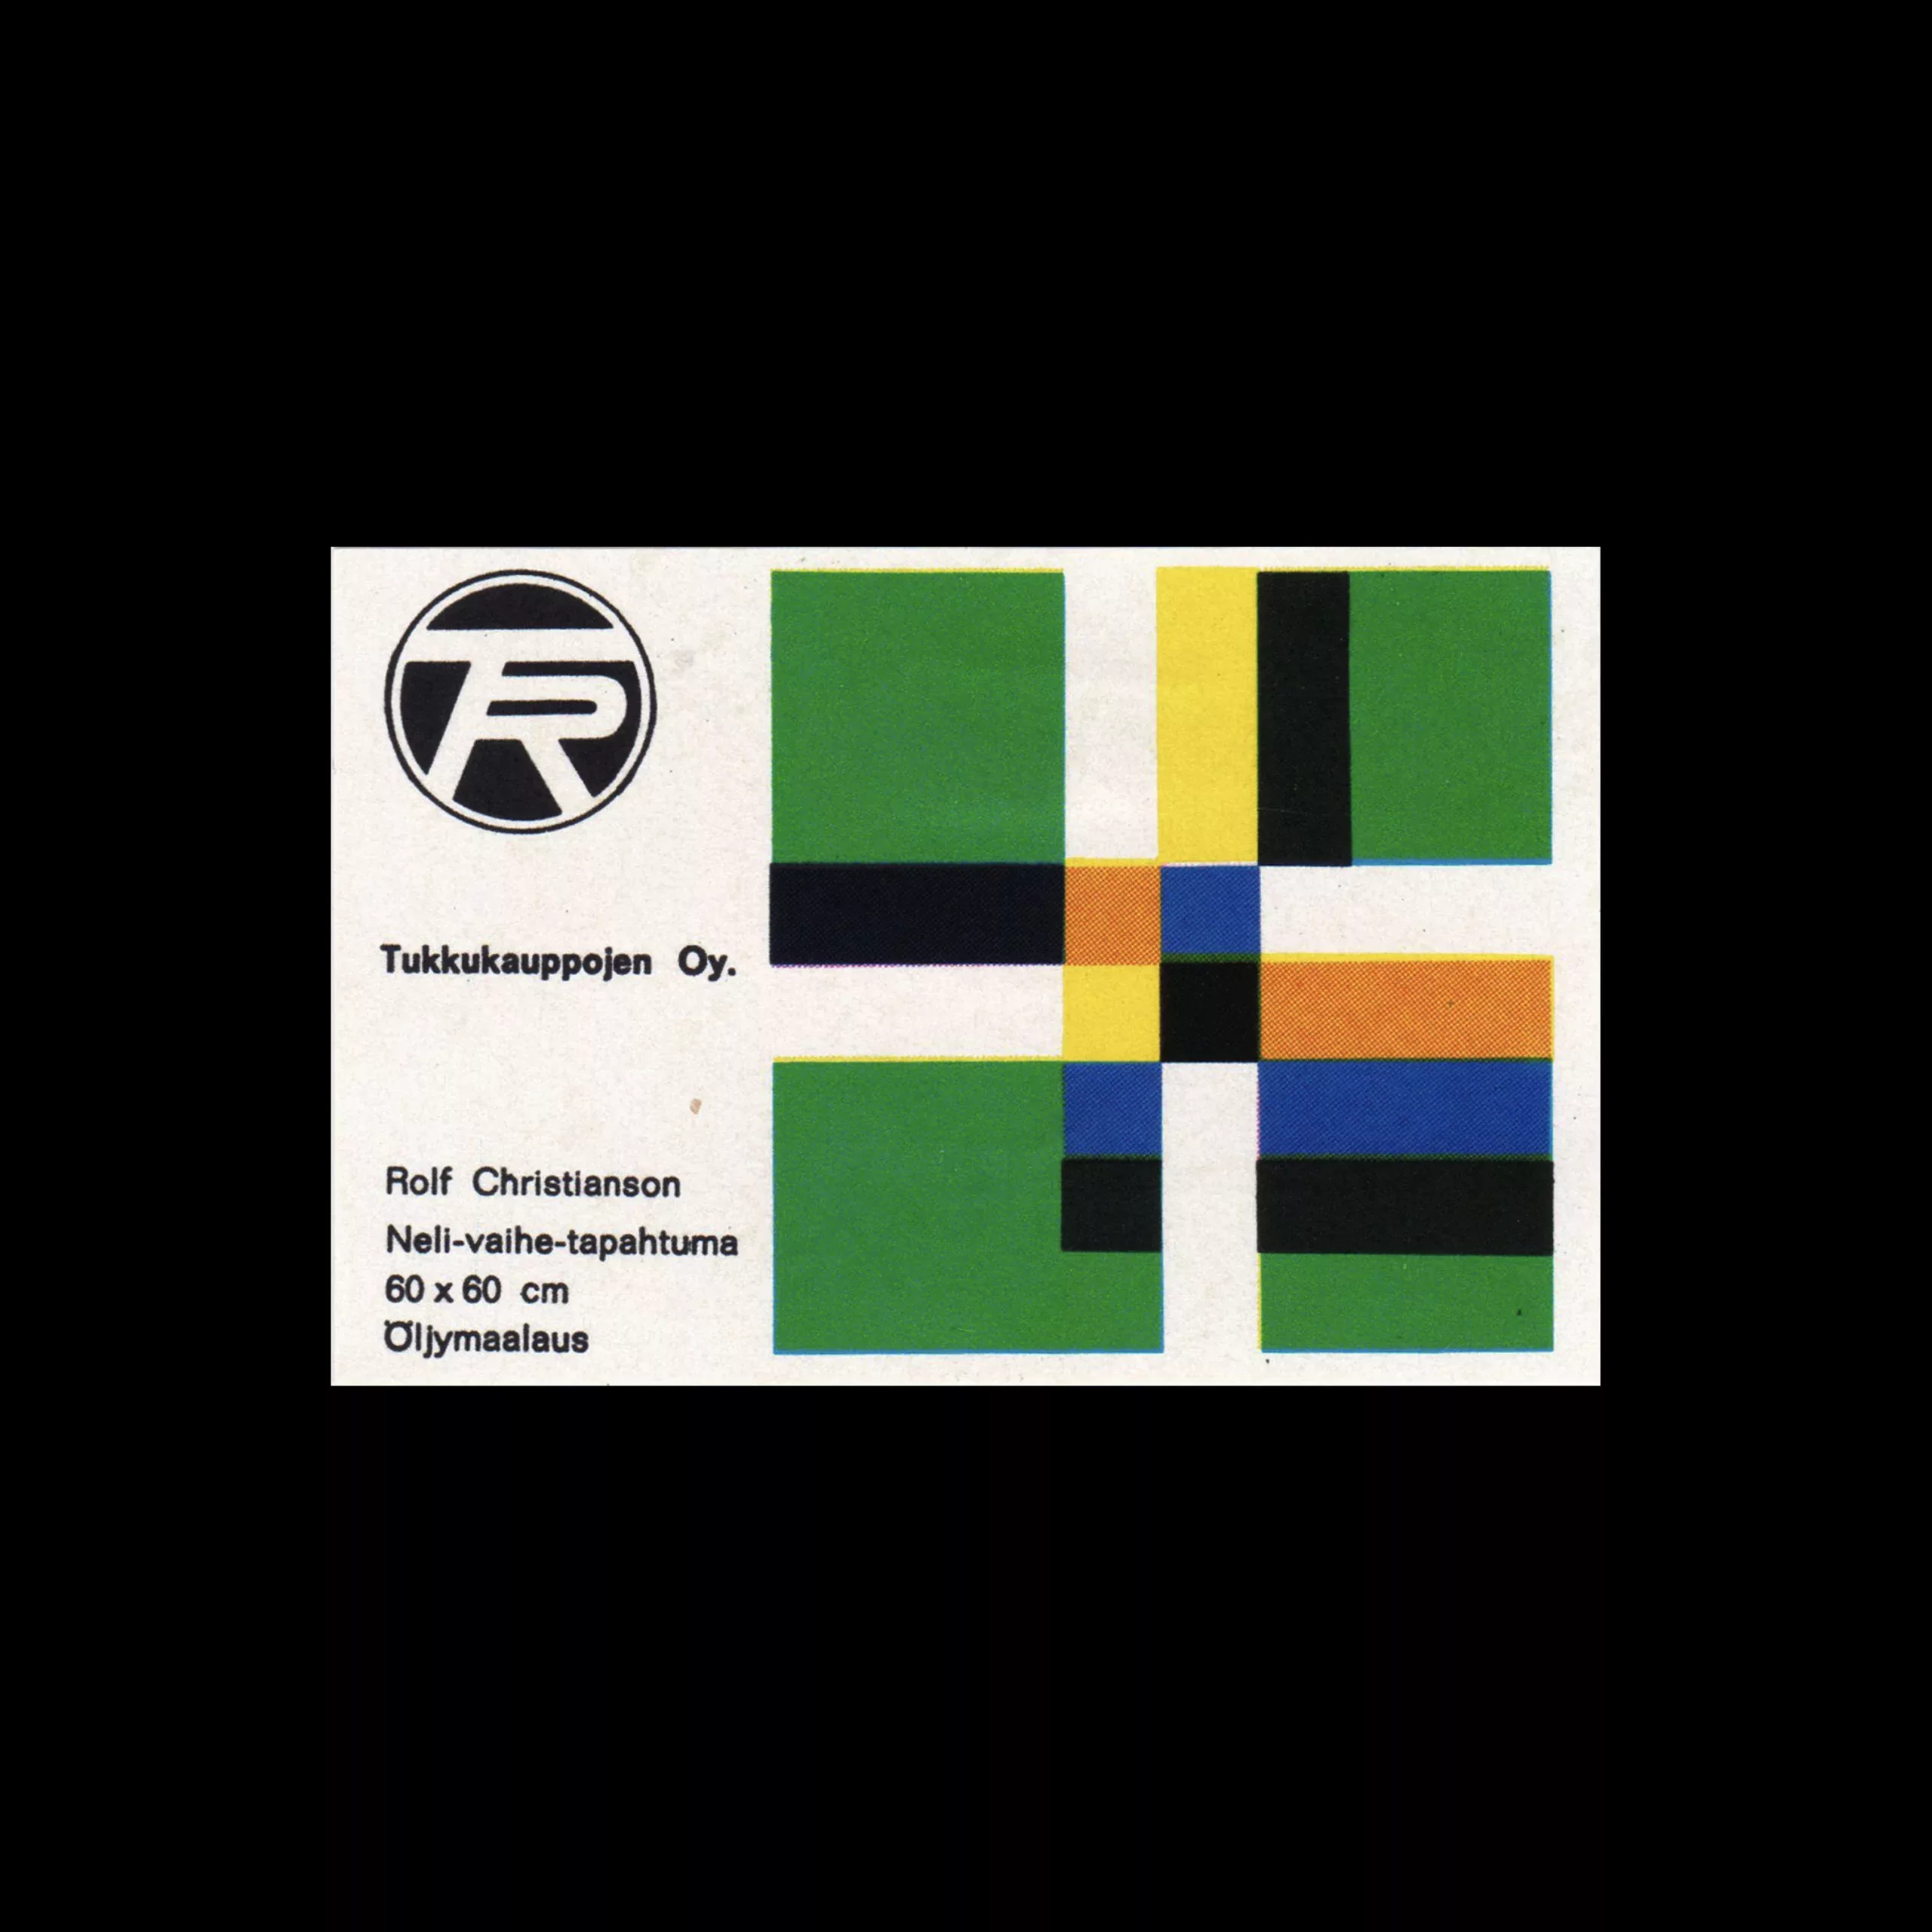 Rolf Christianson, Finnish Matchbox Label Set